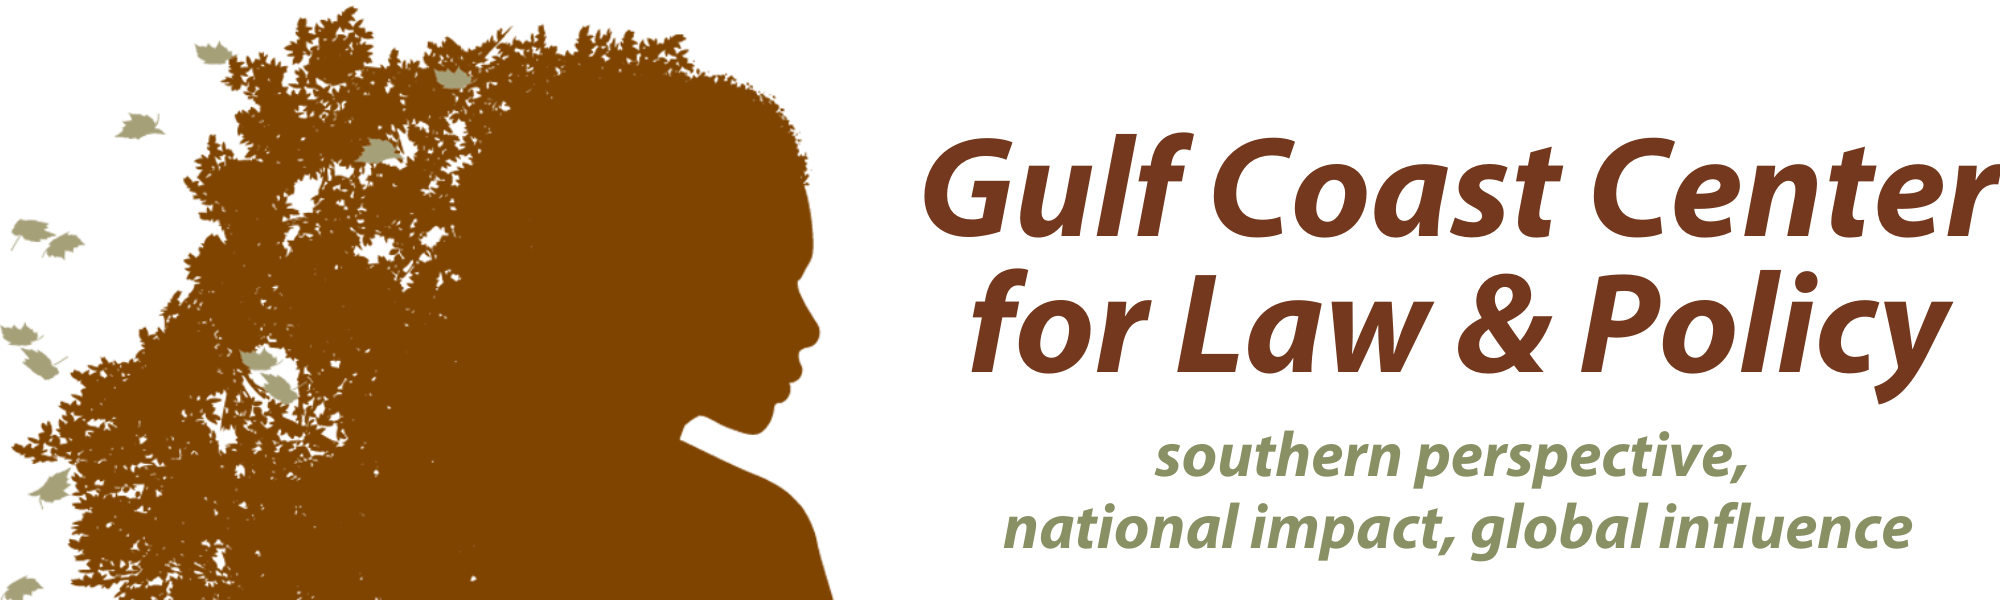 Gulf Coast Center for Law & Policy logo